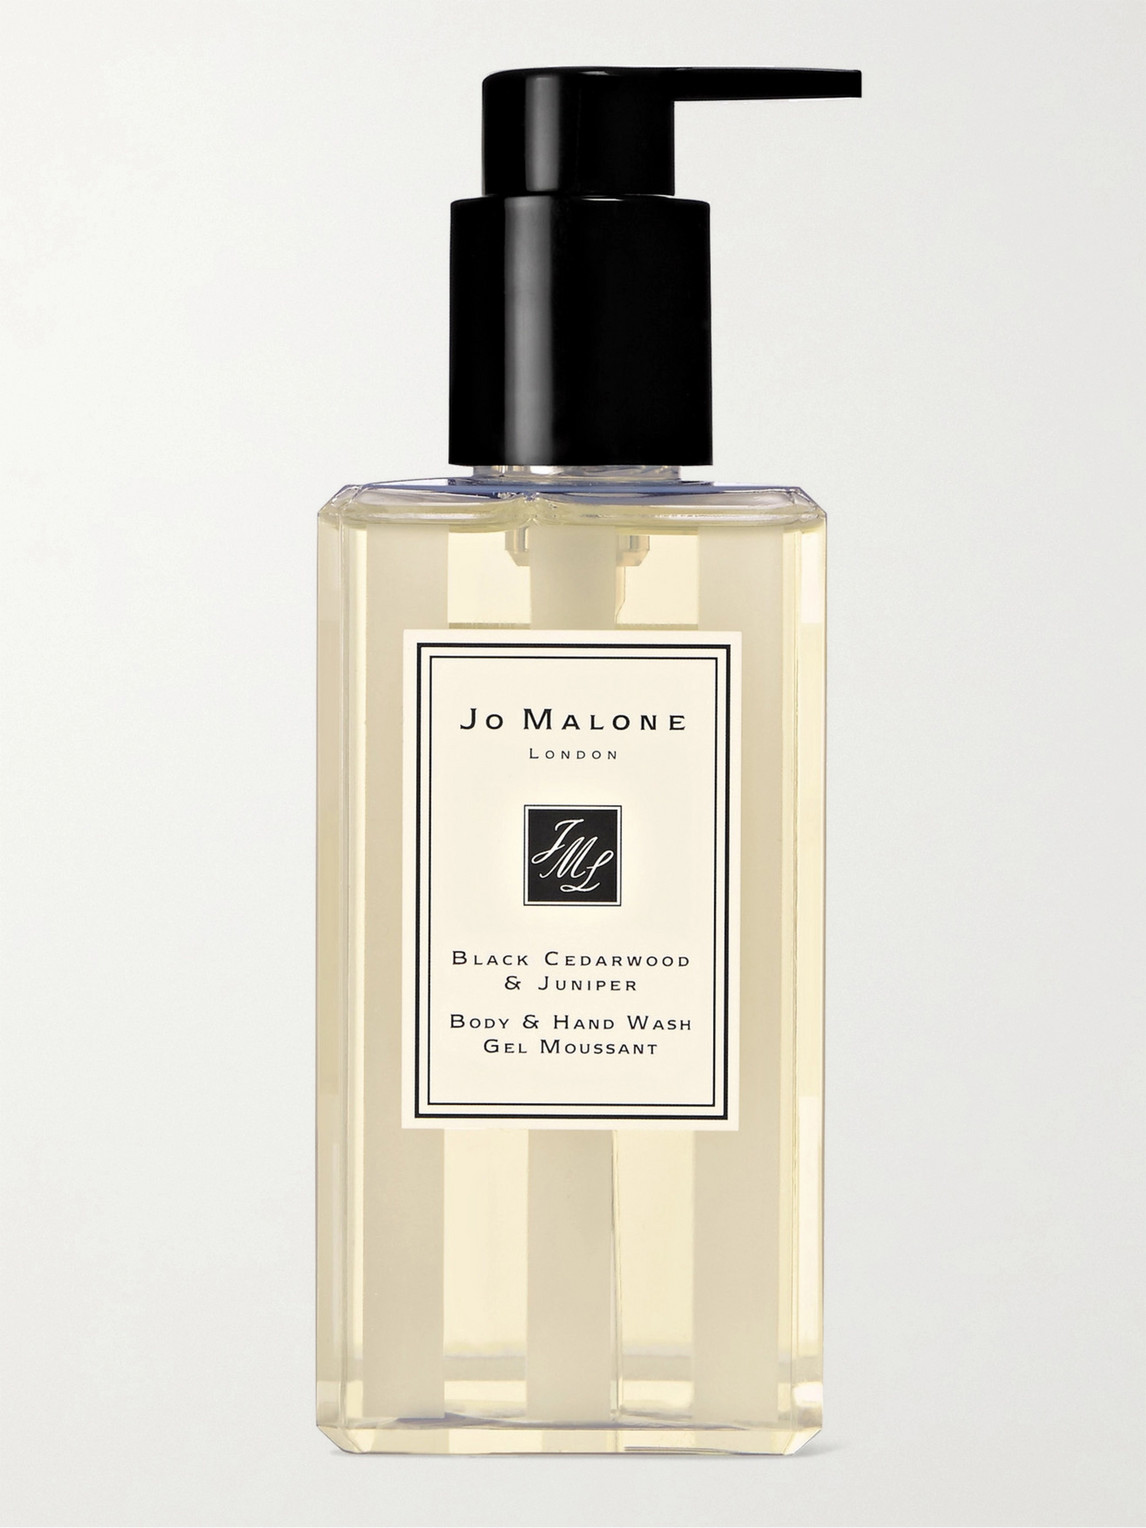 Jo Malone London Black Cedarwood & Juniper Body & Hand Wash, 250ml In Colorless